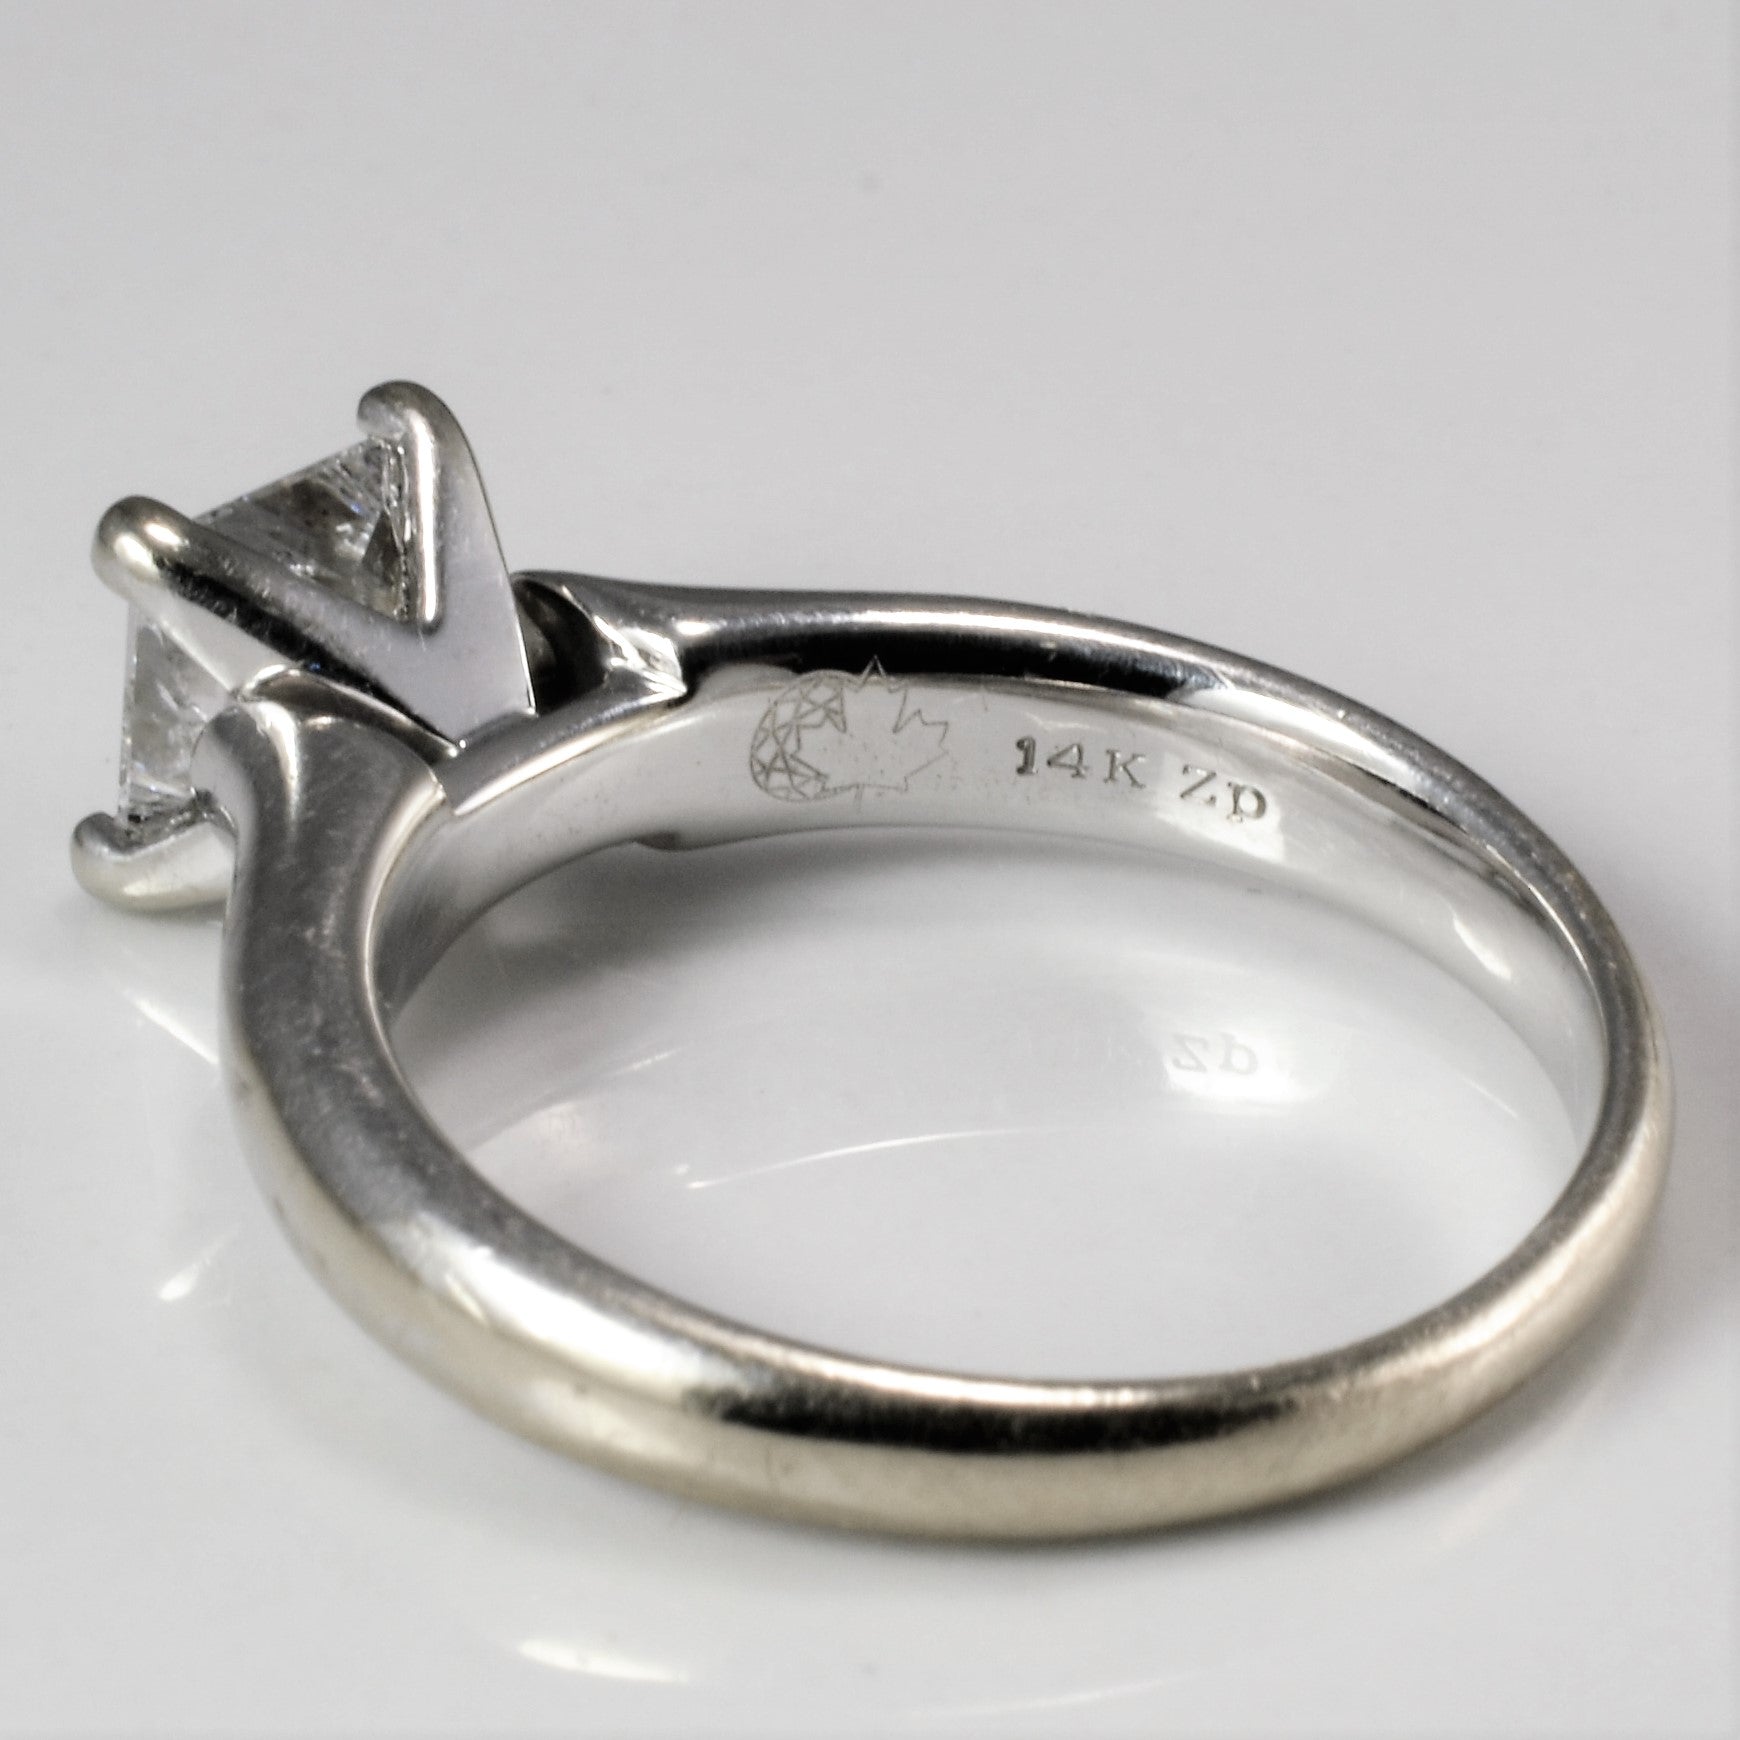 Solitaire Princess Diamond Engagement Ring | 1.05 ct, SZ 6.25 |